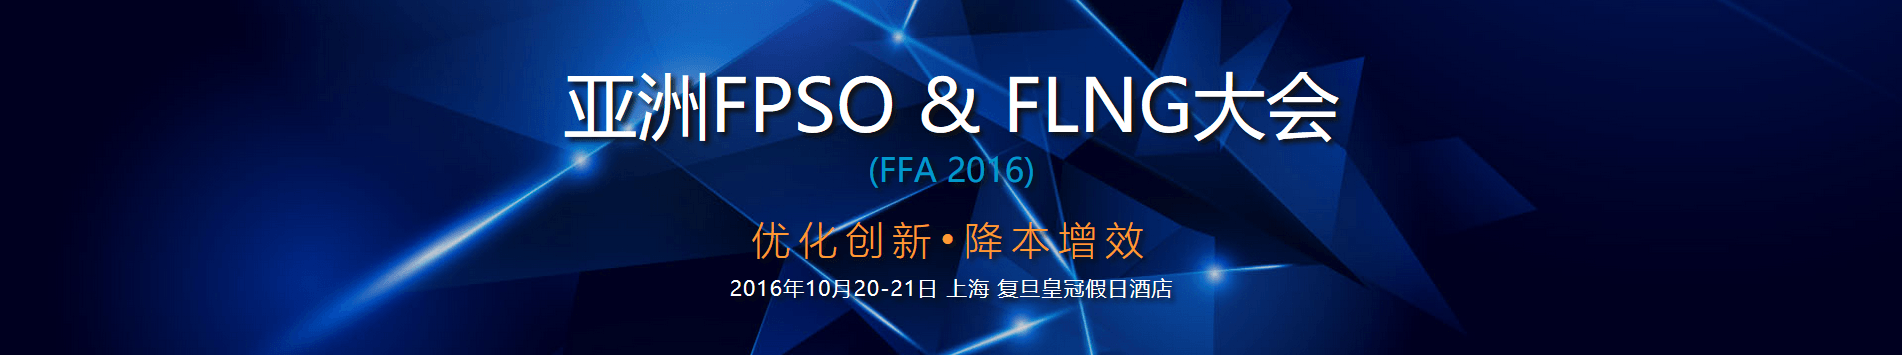 亚洲FPSO&FLNG大会2016 (FFA 2016)